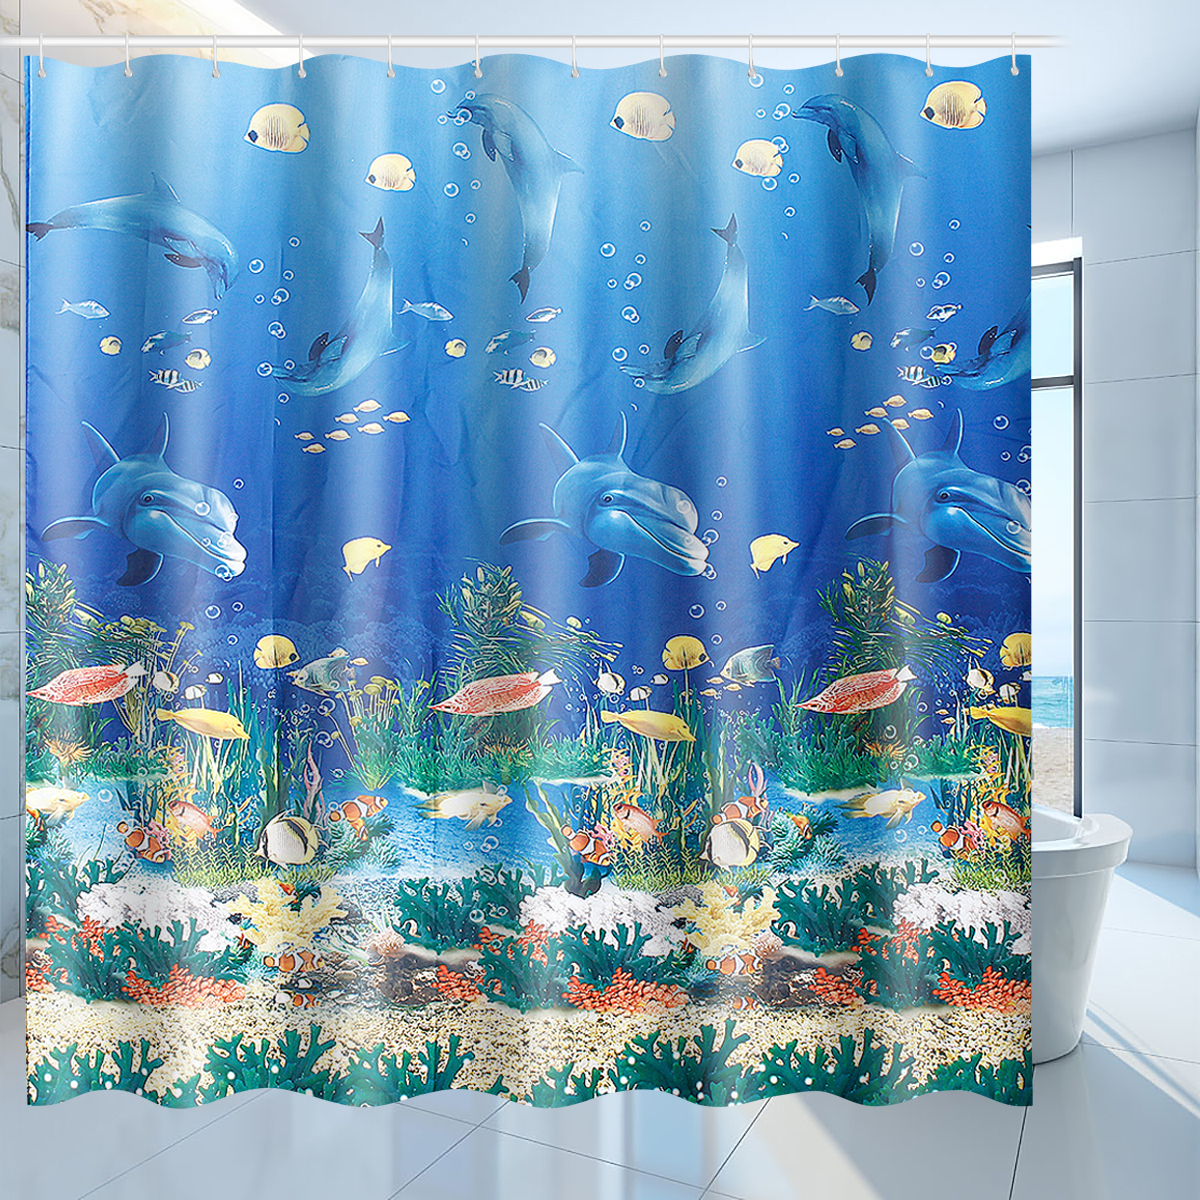 Rideau de douche en polyester impermeable, ocean, 180x180cm, decor de salle de bain avec 12 crochets